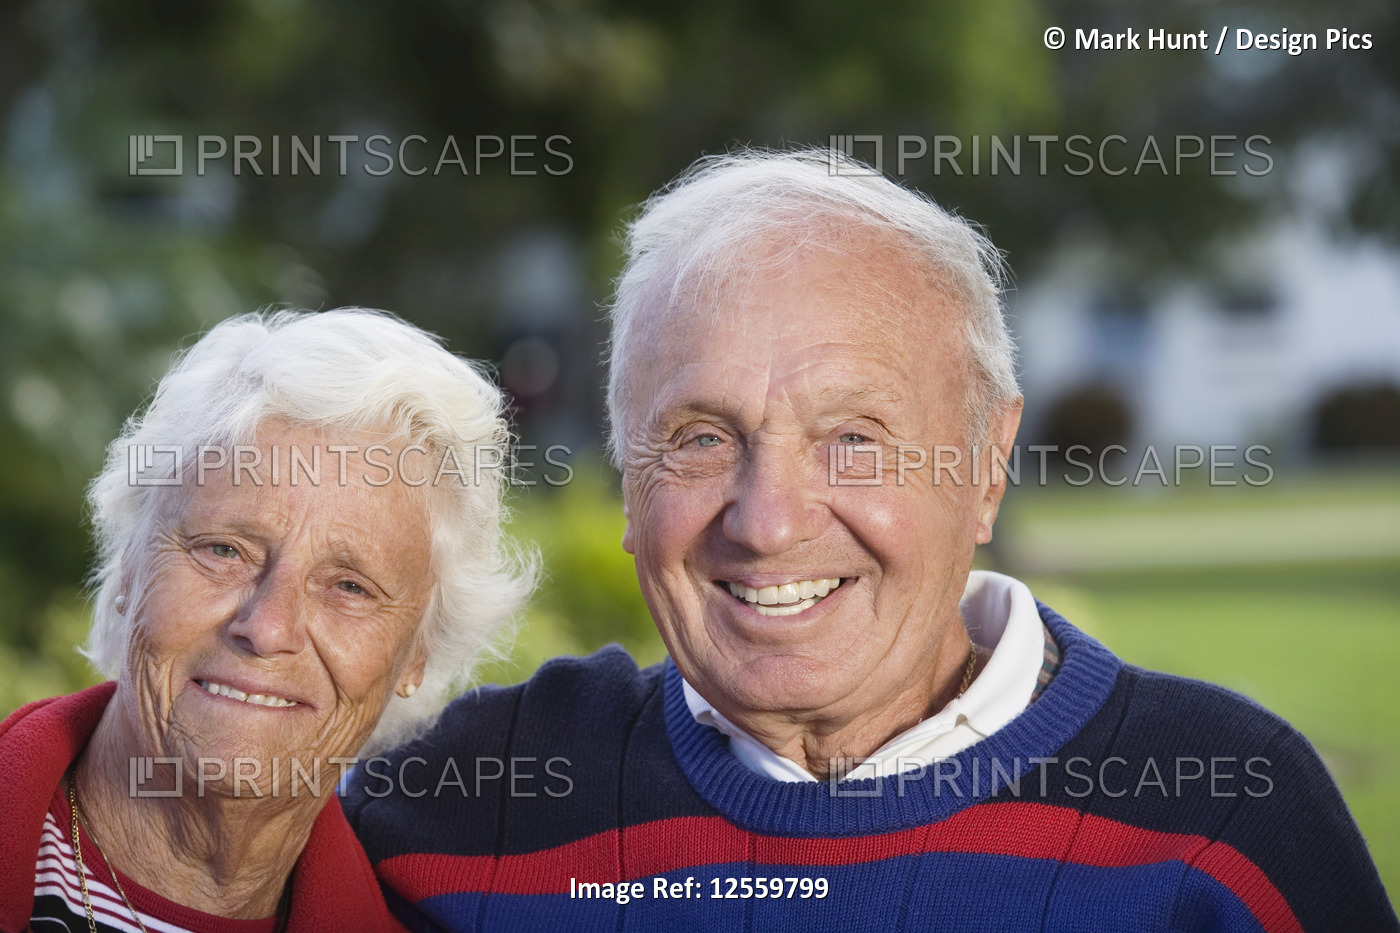 Portrait of a senior couple smiling in a park.